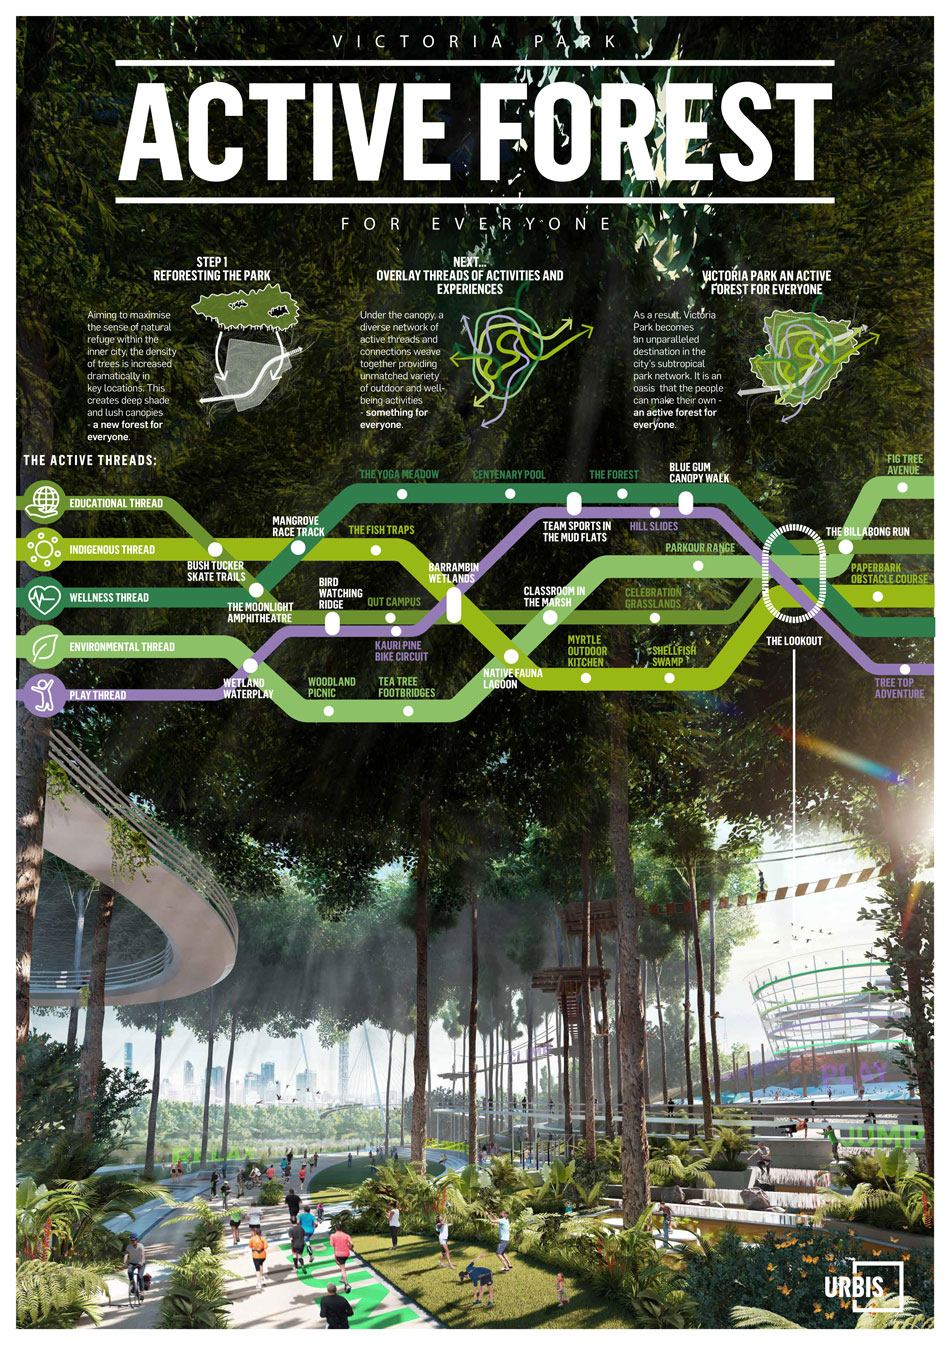 Urbis' Victoria Park Vision idea called 'Active Forest'